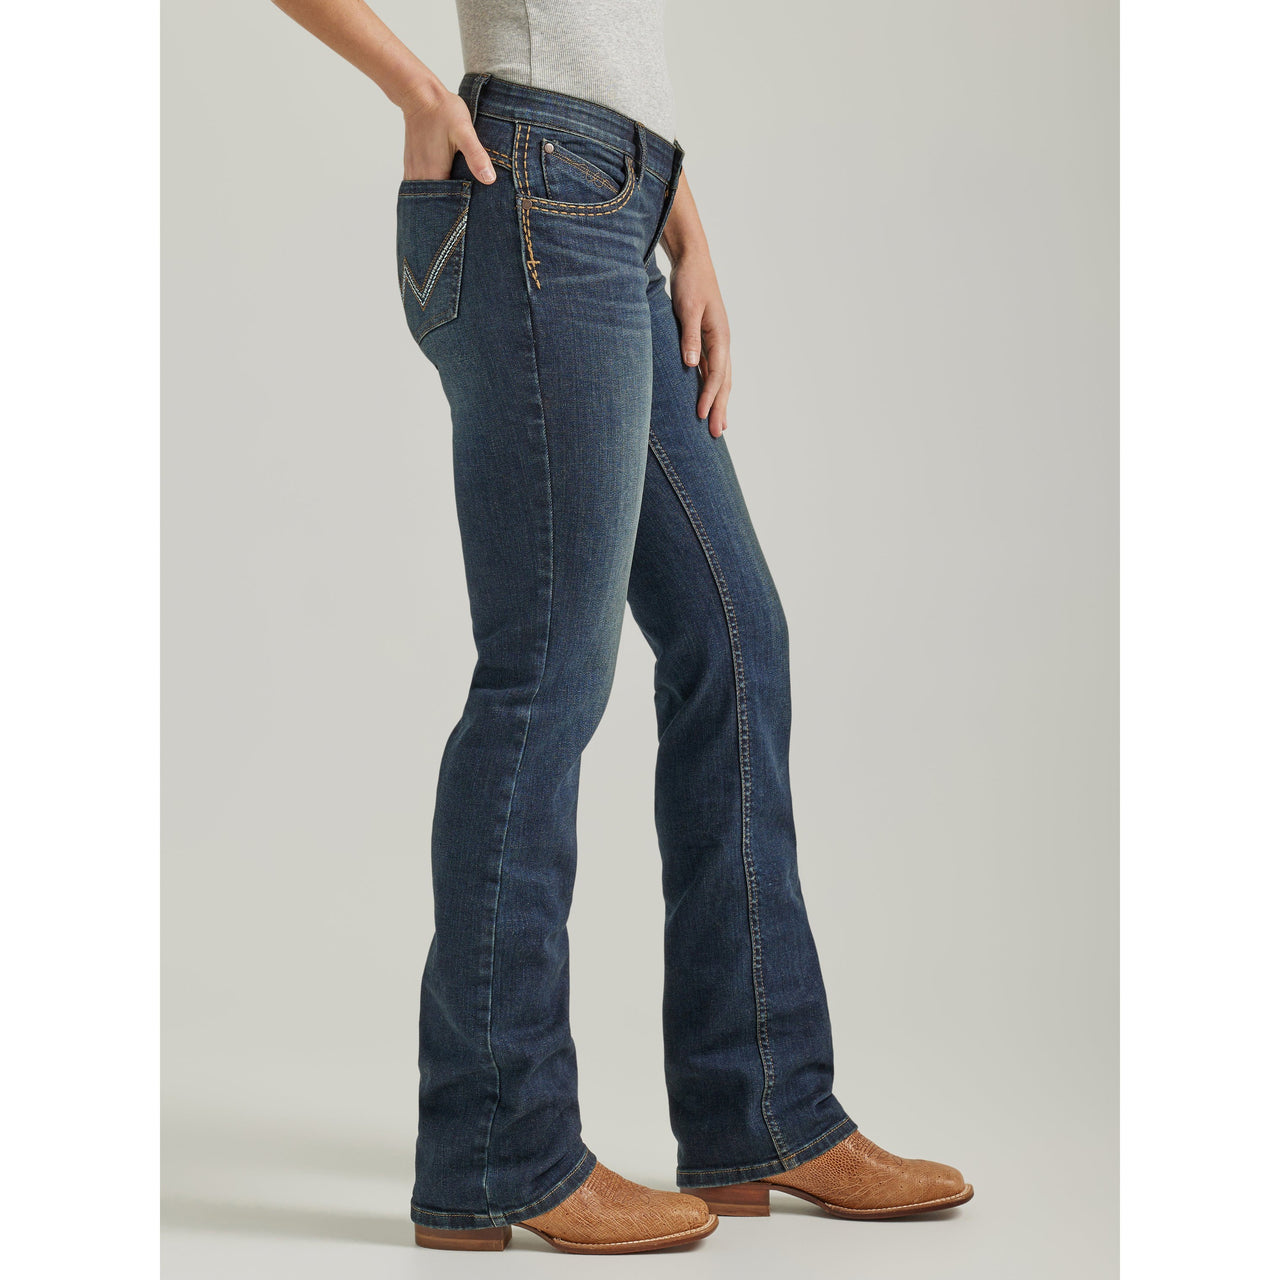 Wrangler Women's Ultimate Riding Shiloh Low Rise Bootcut Jeans - Della